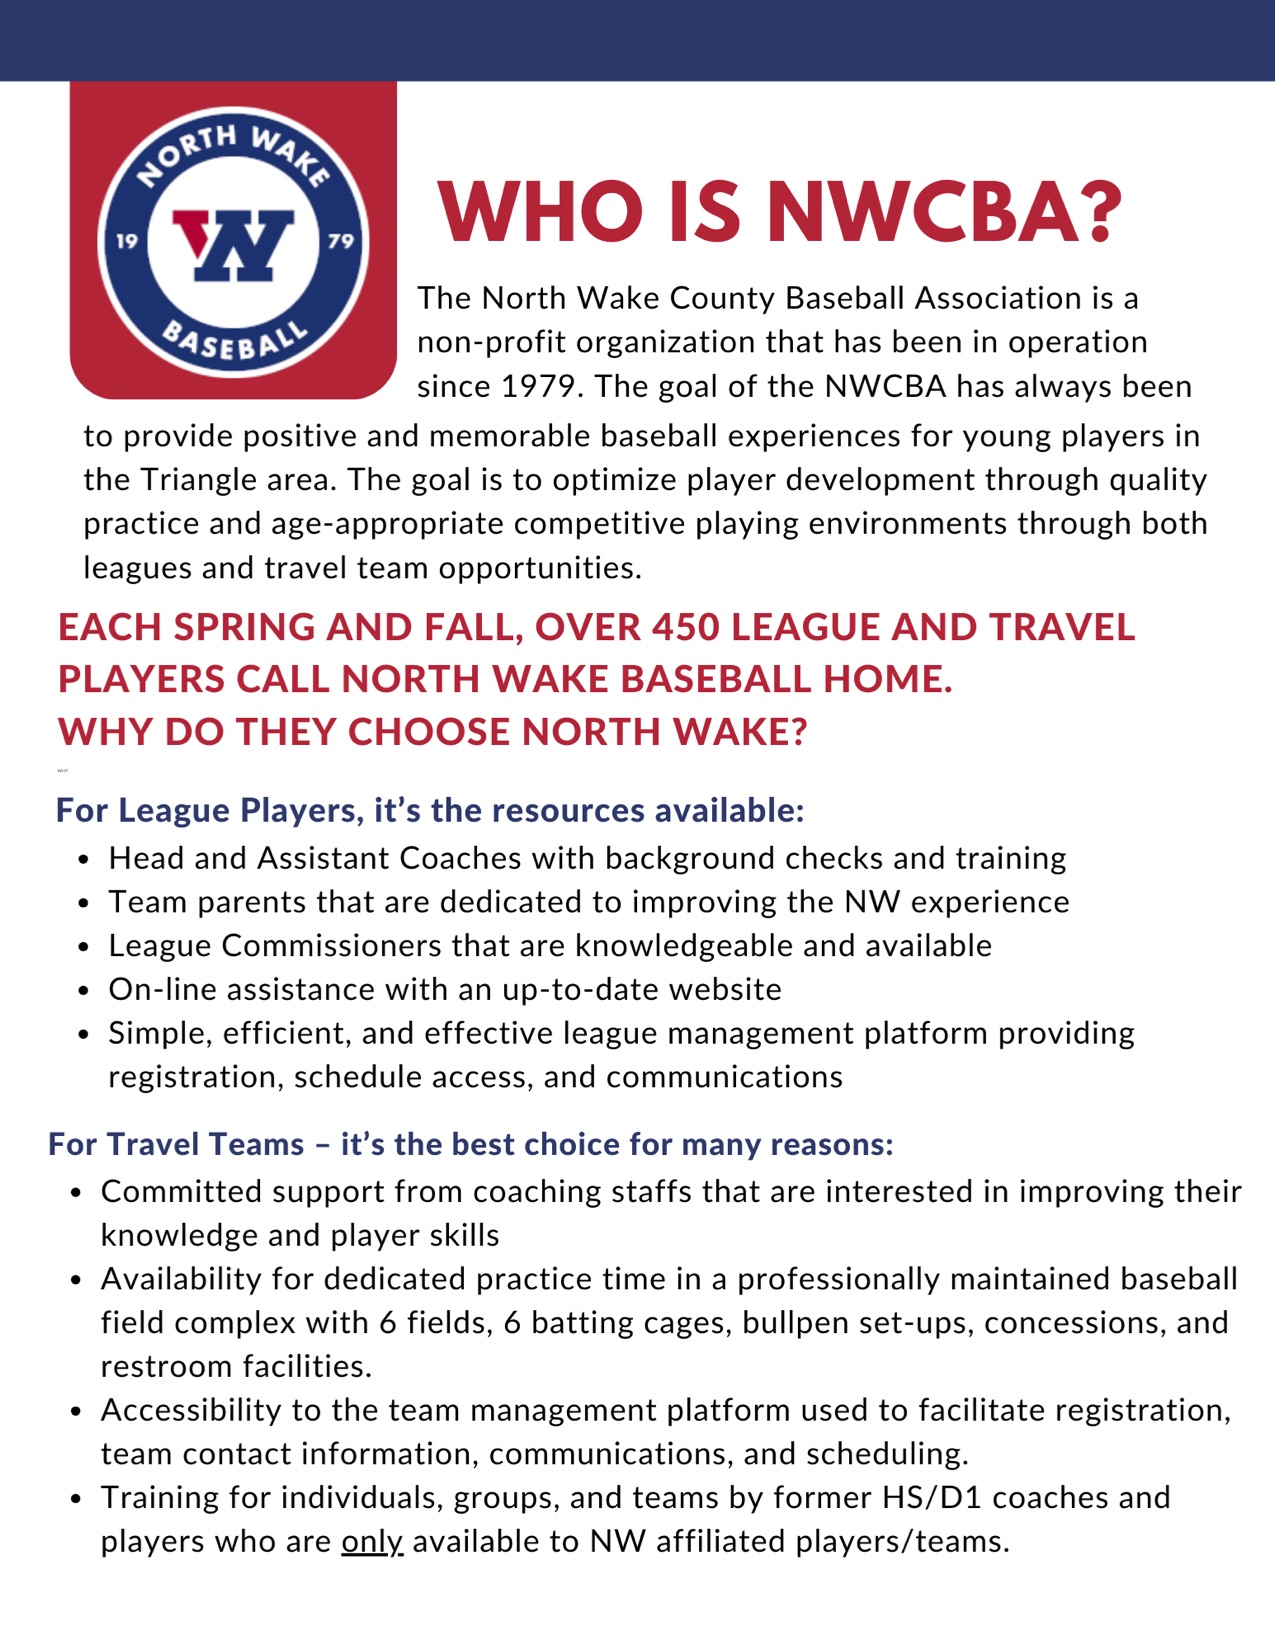 Who is NWCBA?